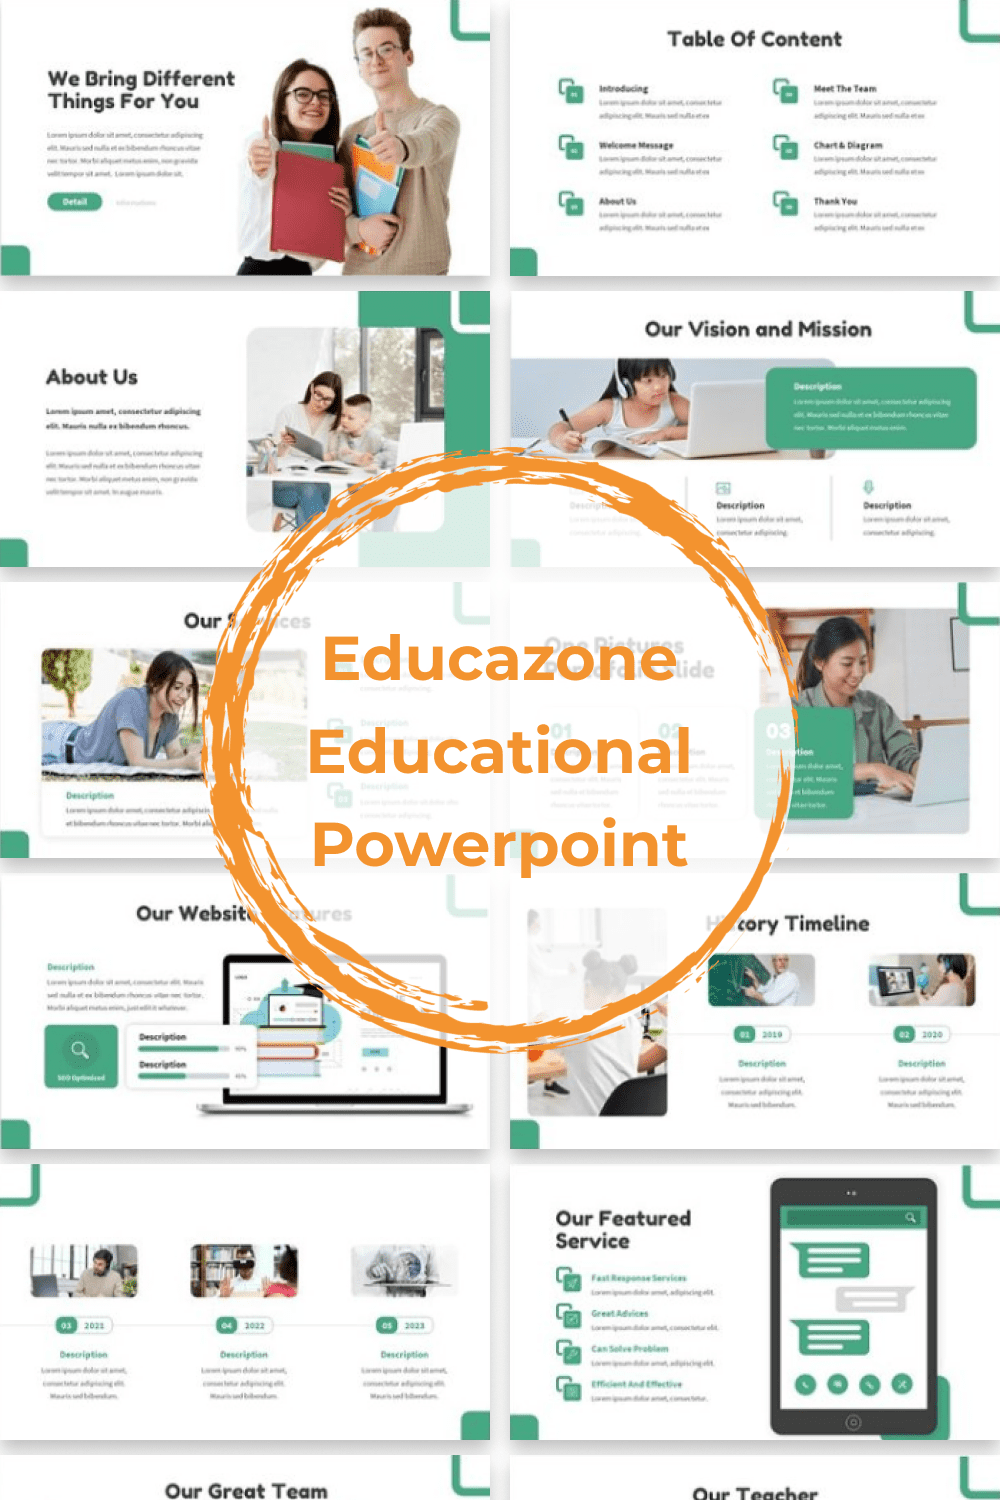 Educazone - Educational Powerpoint Pinterest.